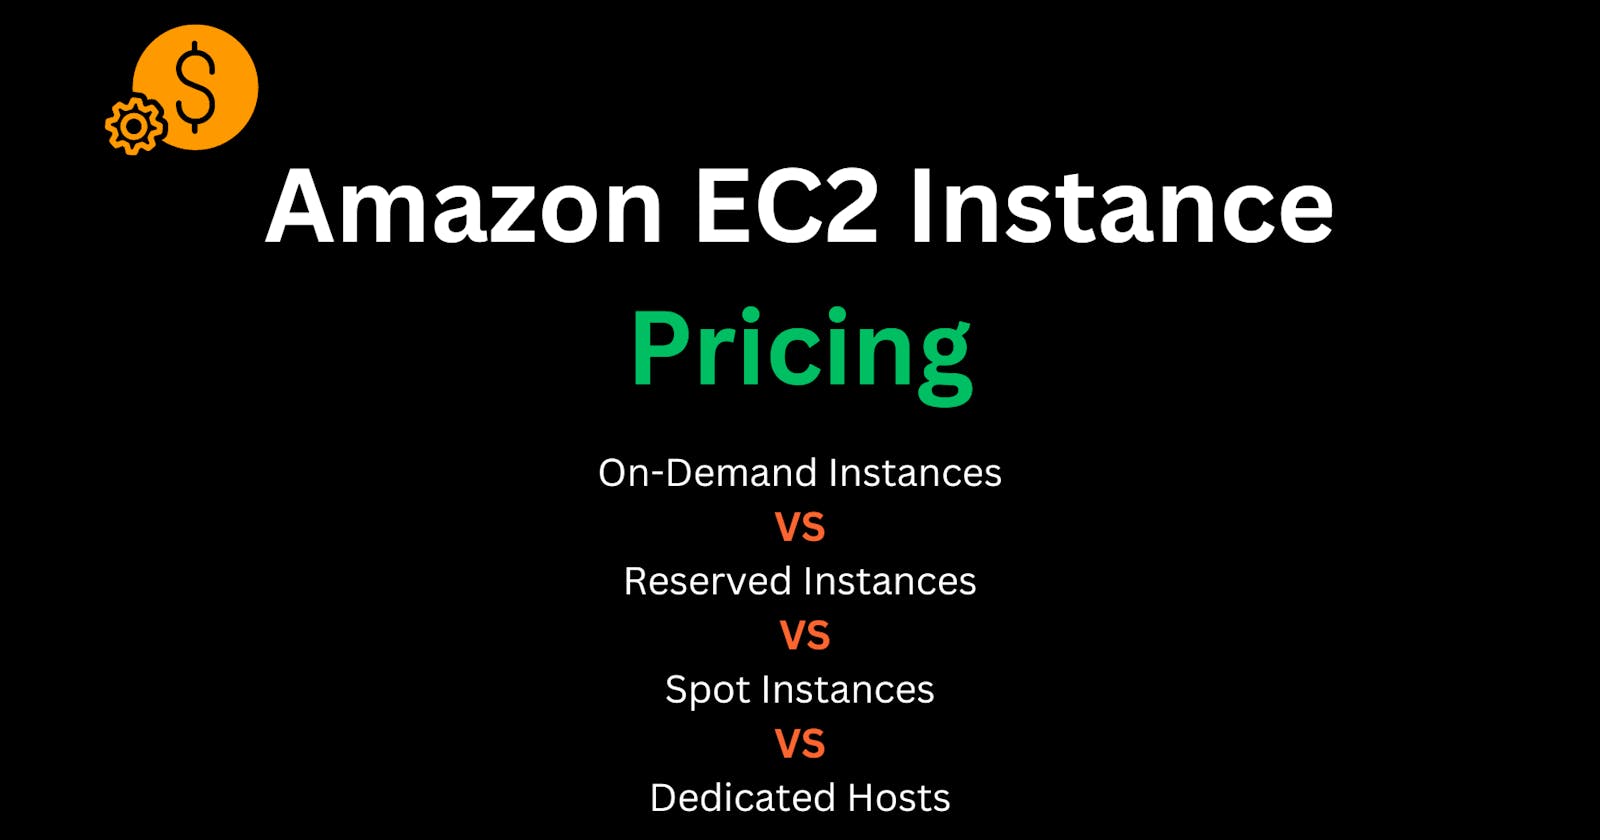 Amazon EC2 Instance Pricing